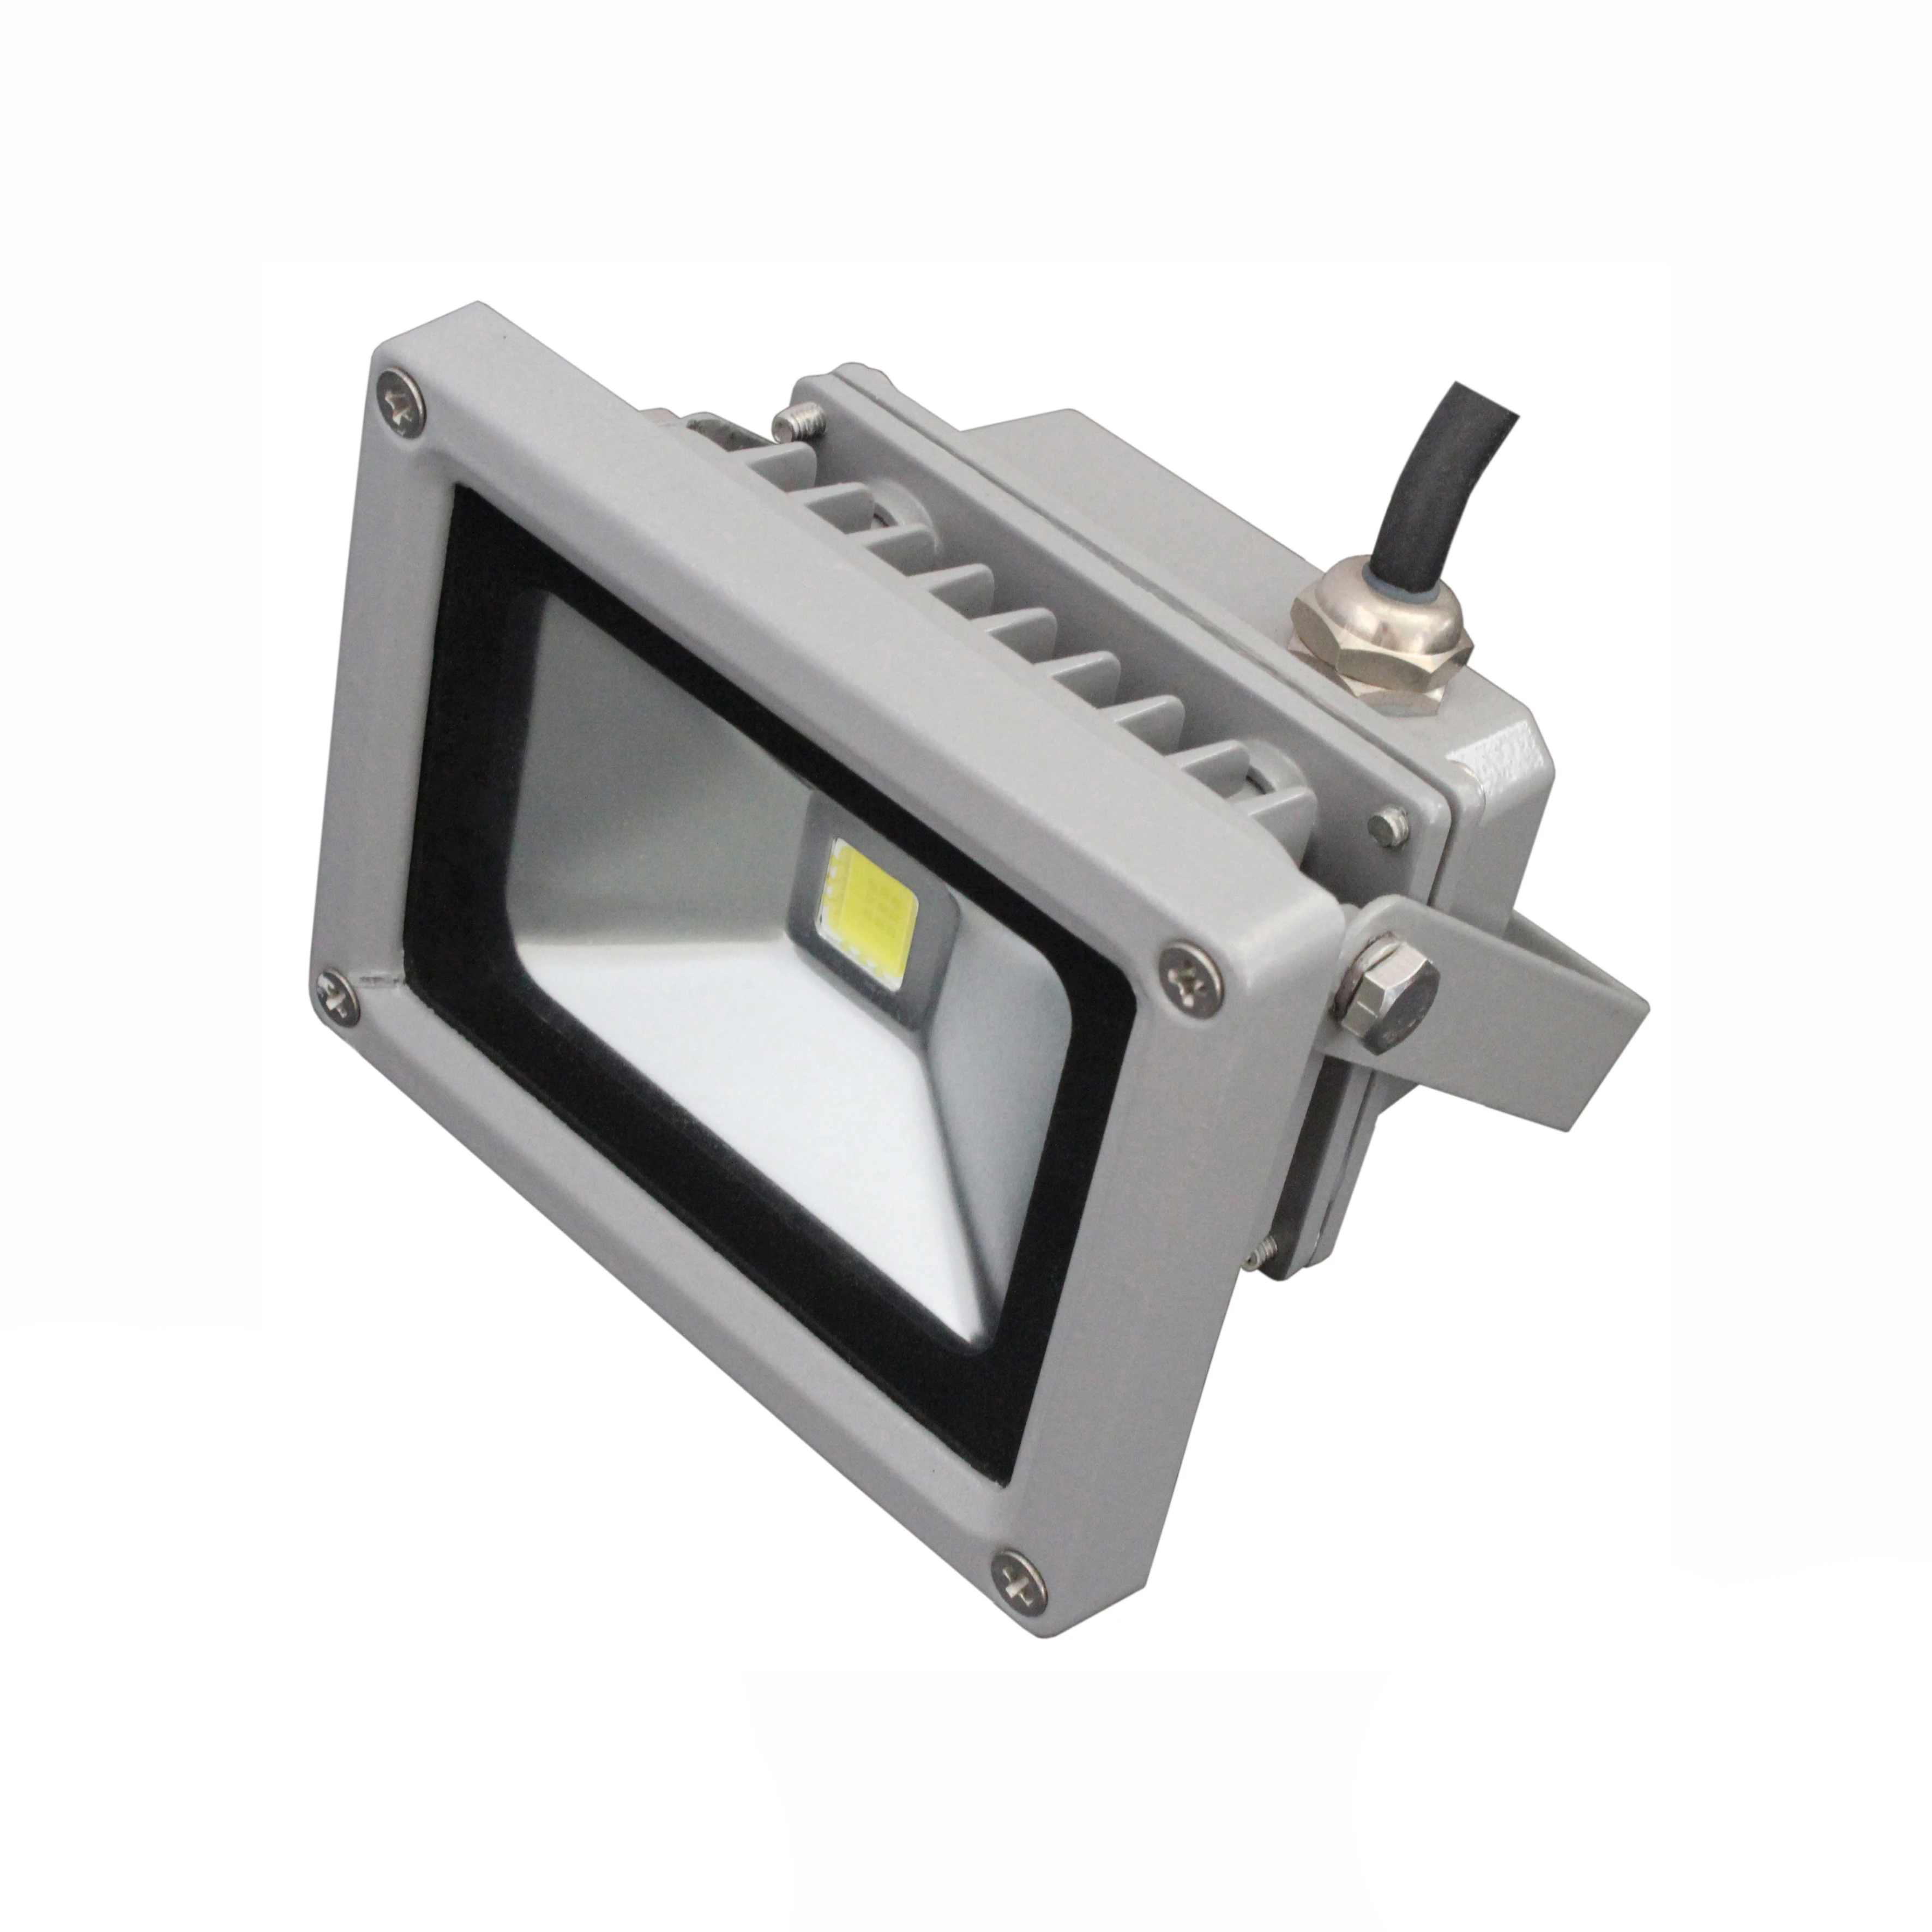 

10PCS 10W LED Flood Light Floodlight Spotlight Bulb UV Bridgelux Chip 3 Years Warranty IP65 Waterproof Super Bright 100-110LM/W